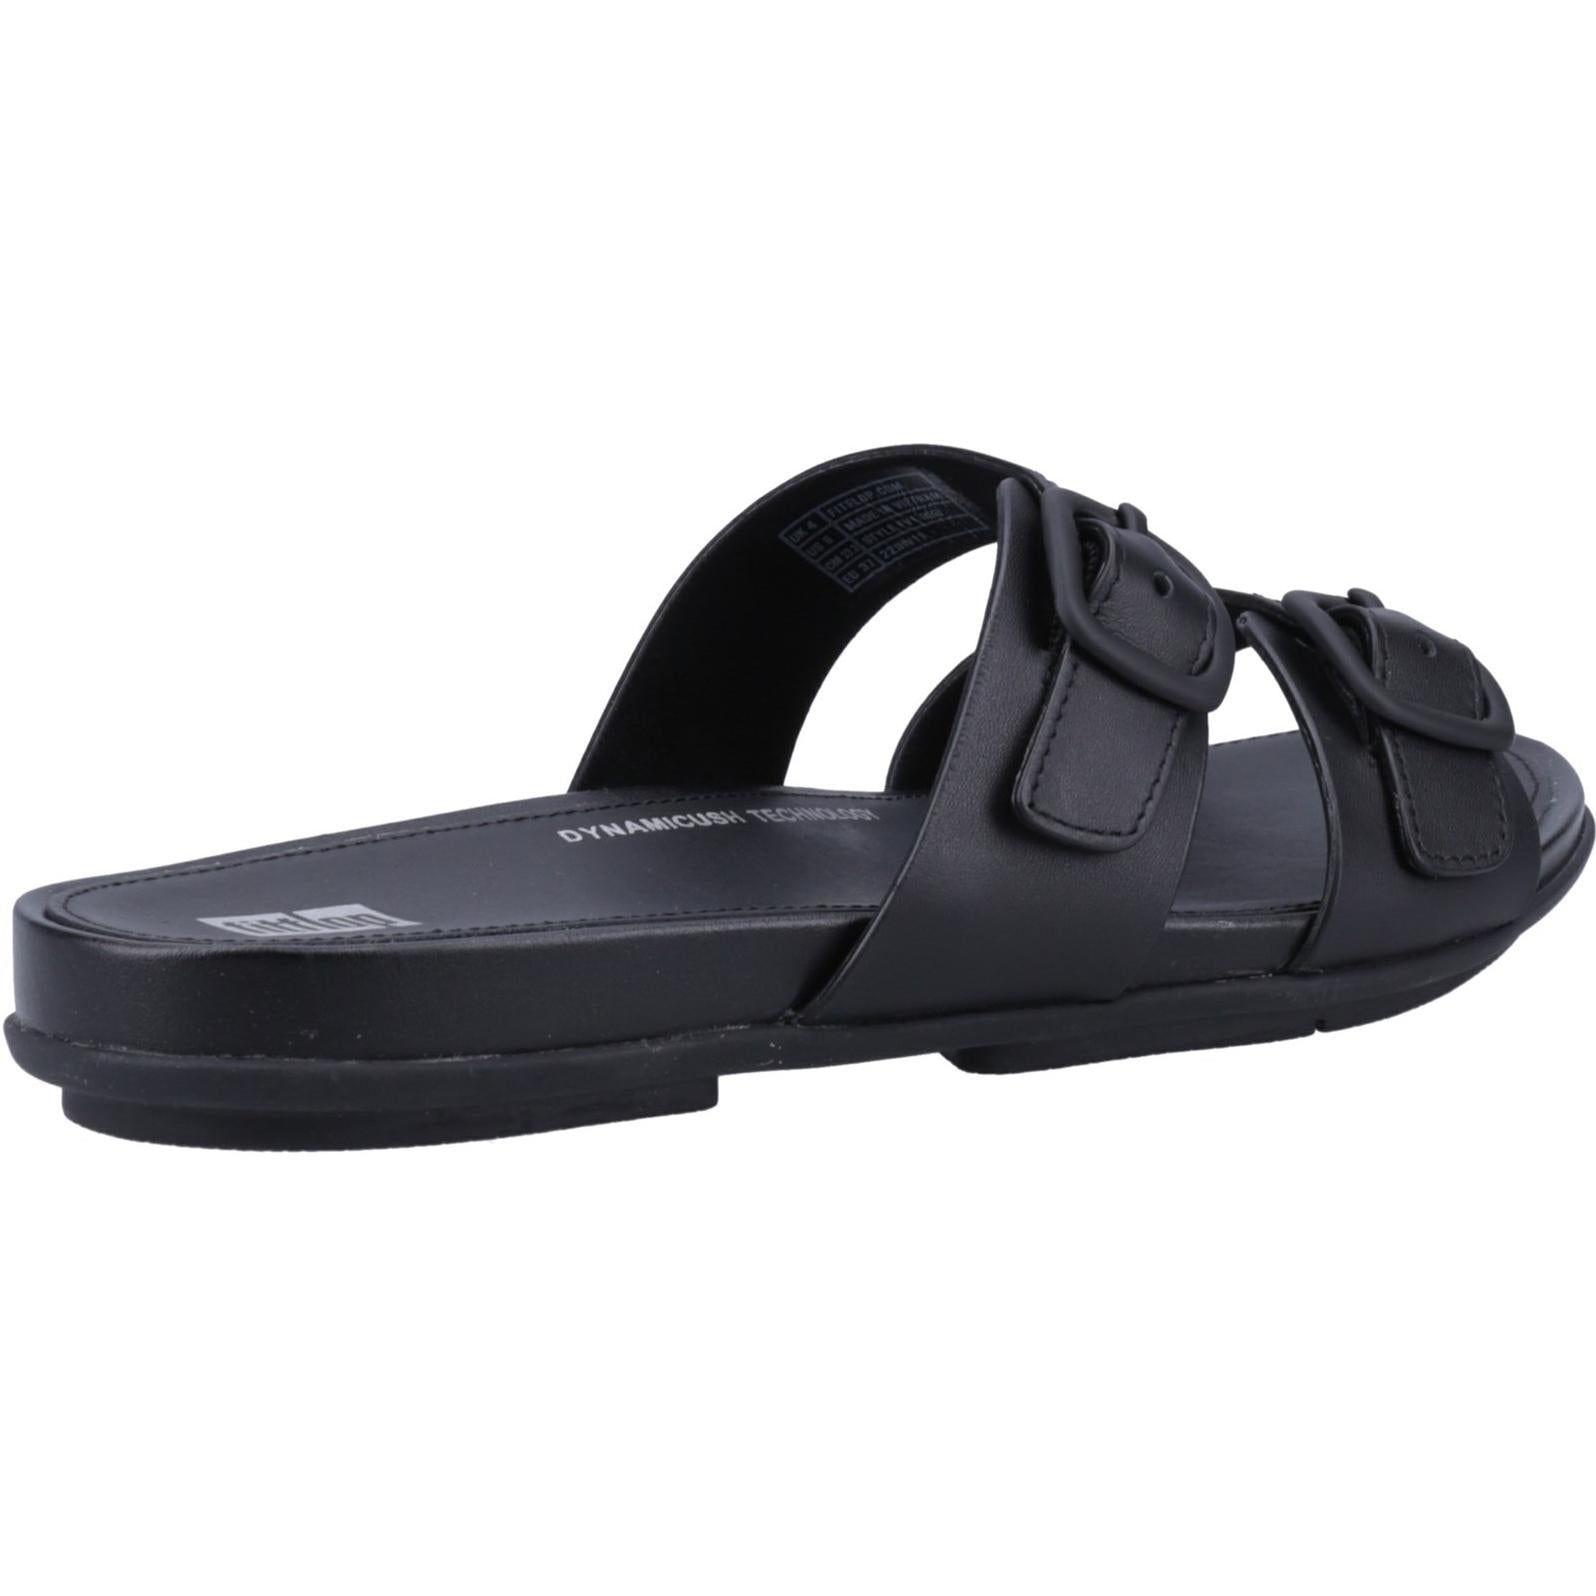 Fitflop Gracie Slides Sandals